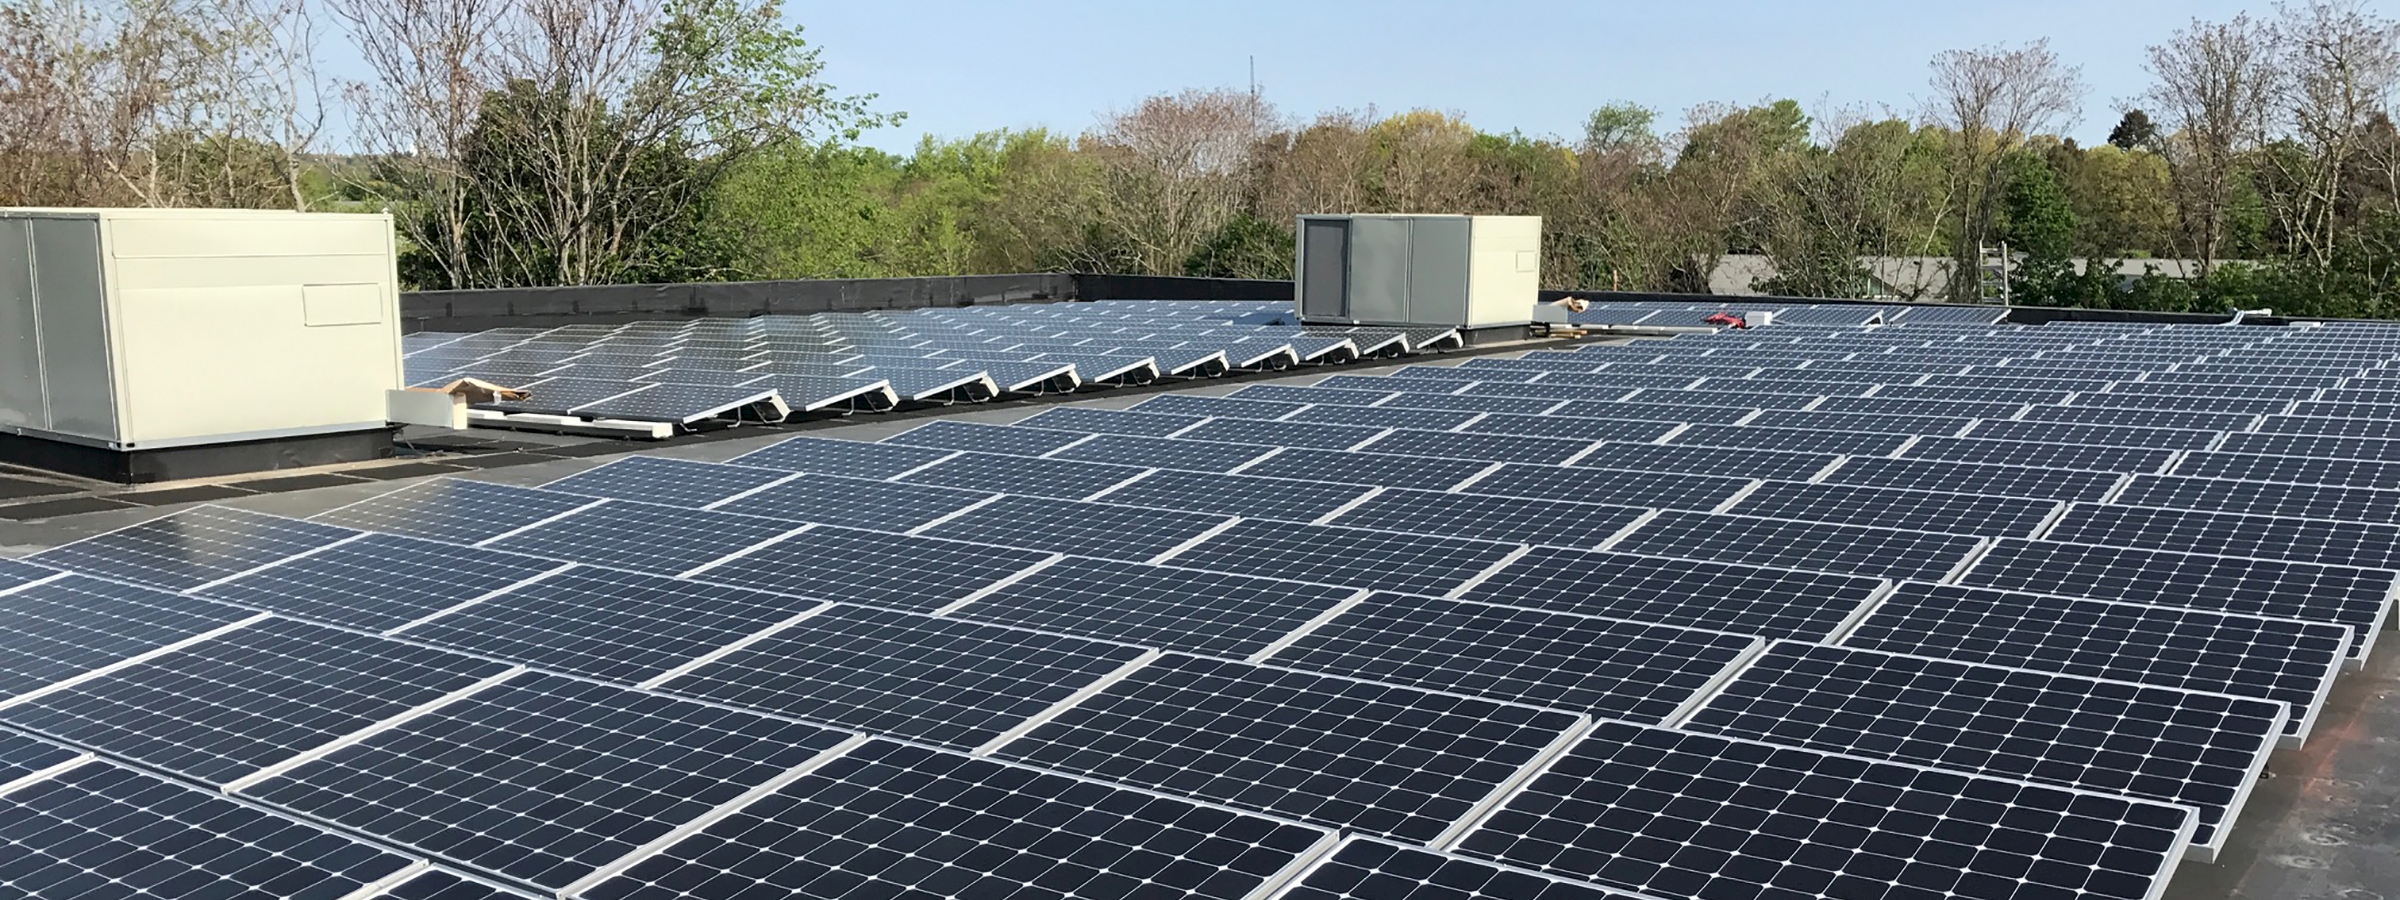 Boston Solar Provides Solar Panel System to the Woburn Boys and Girls Club